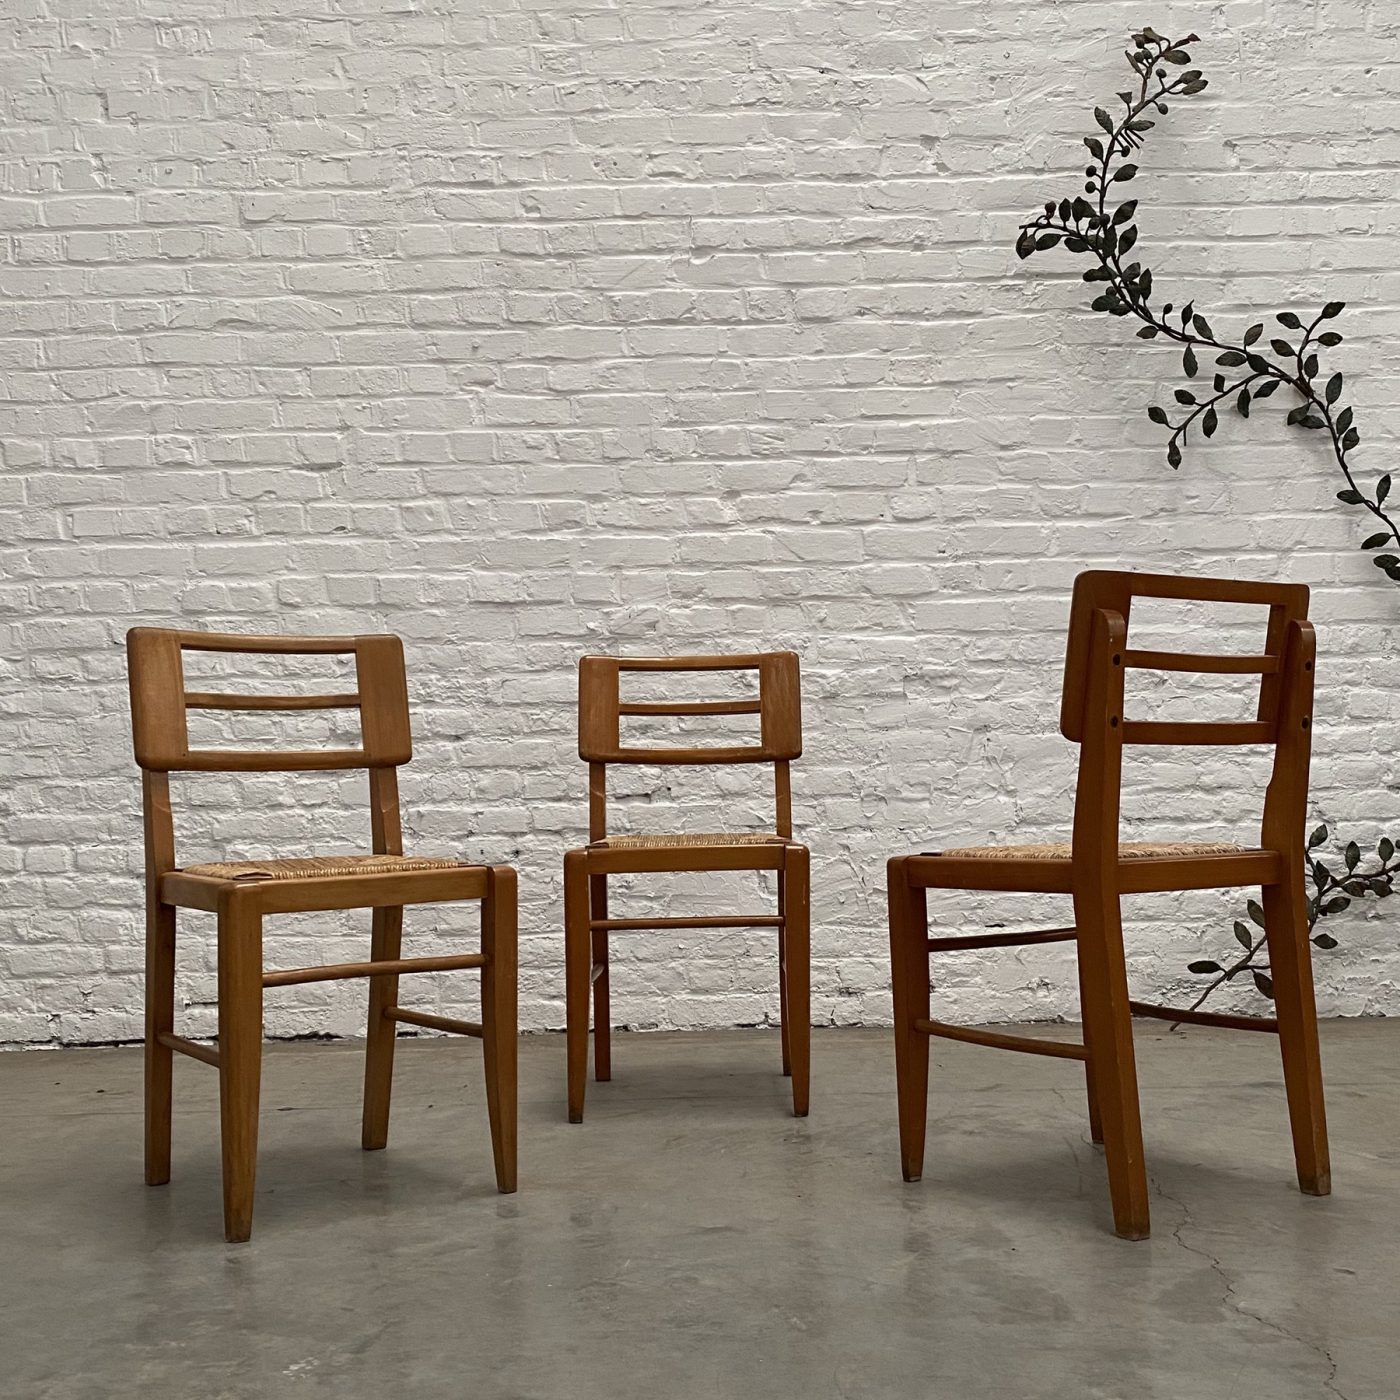 objet-vagabond-cruege-chairs0005